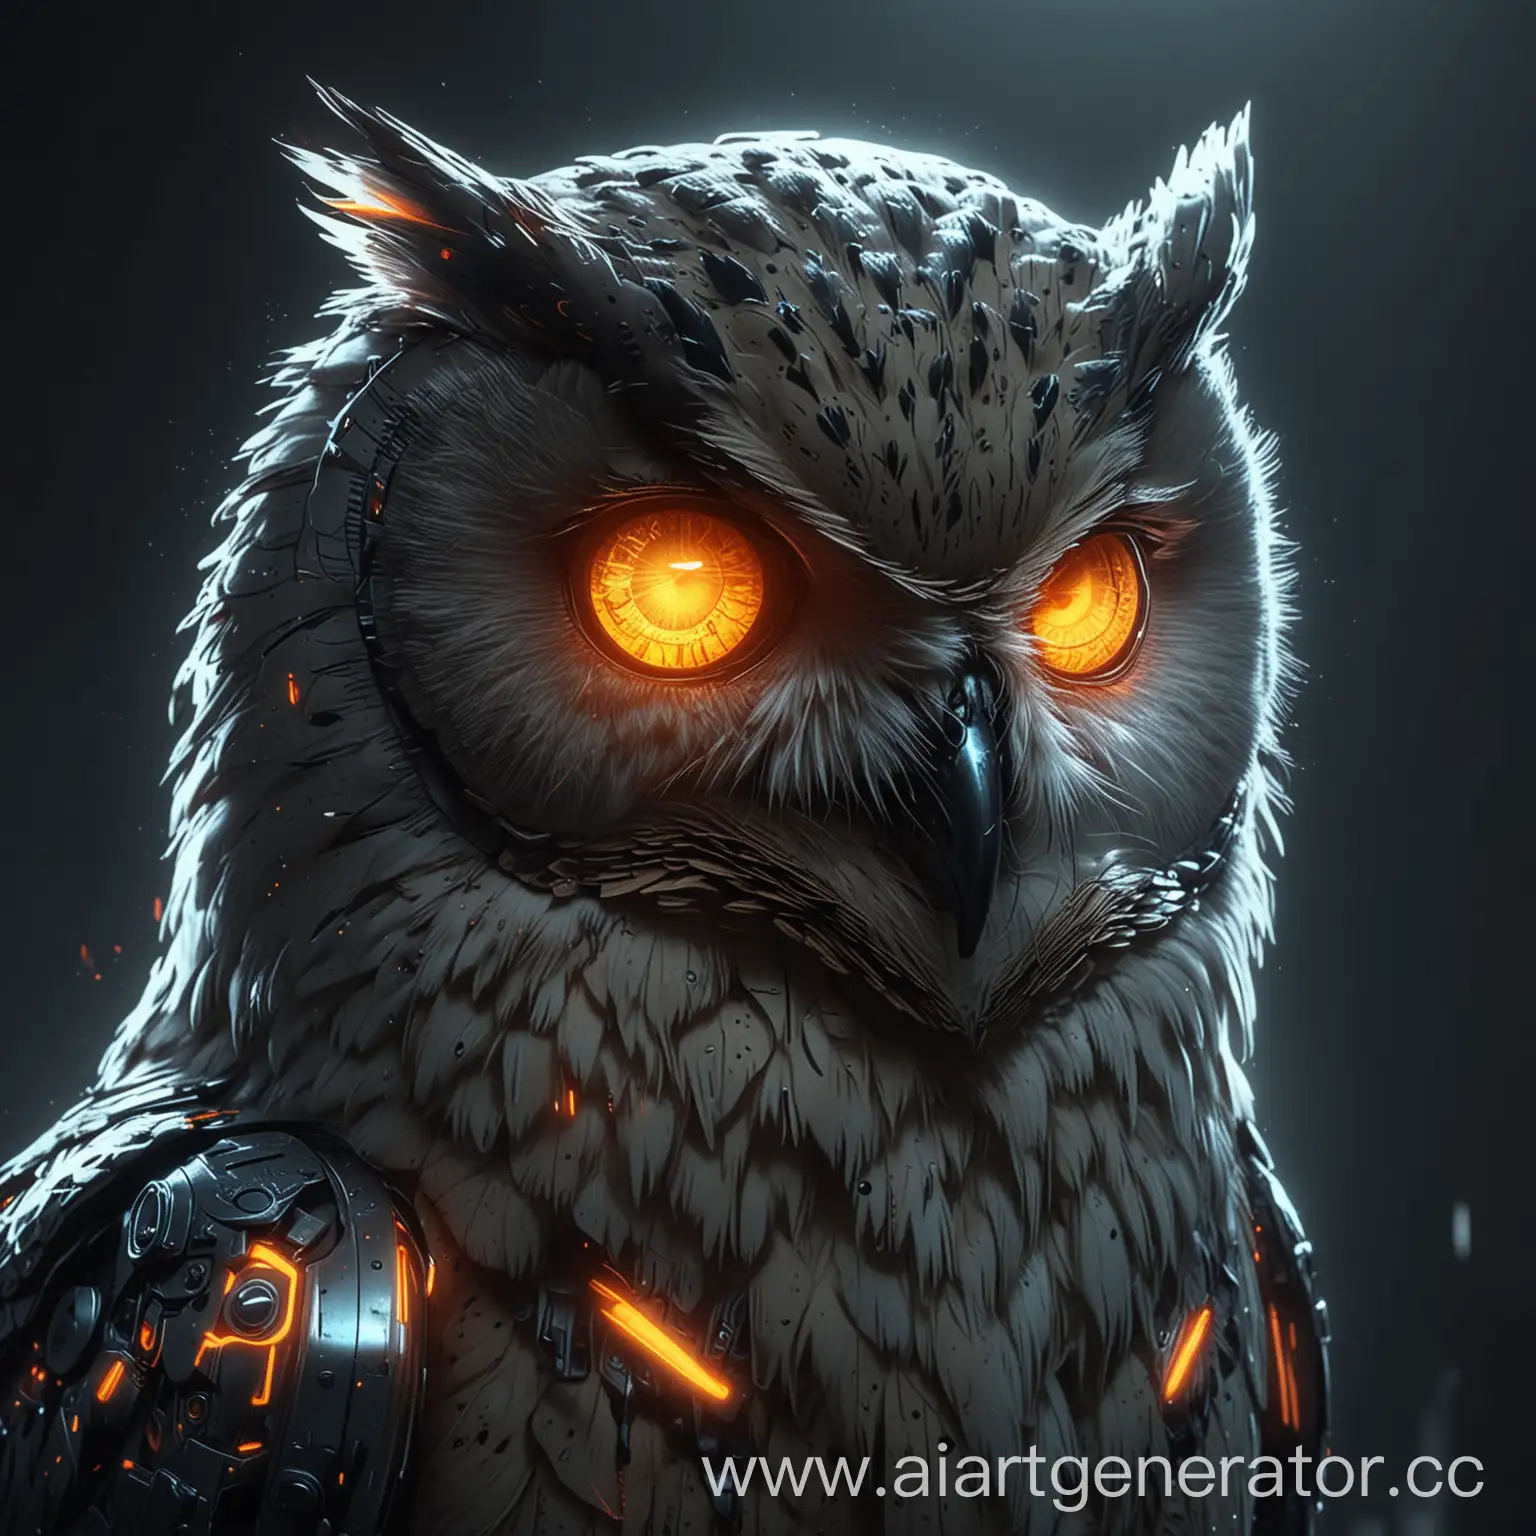 Cyberpunk-Owl-with-Glowing-Eyes-HighQuality-4K-Profile-Portrait